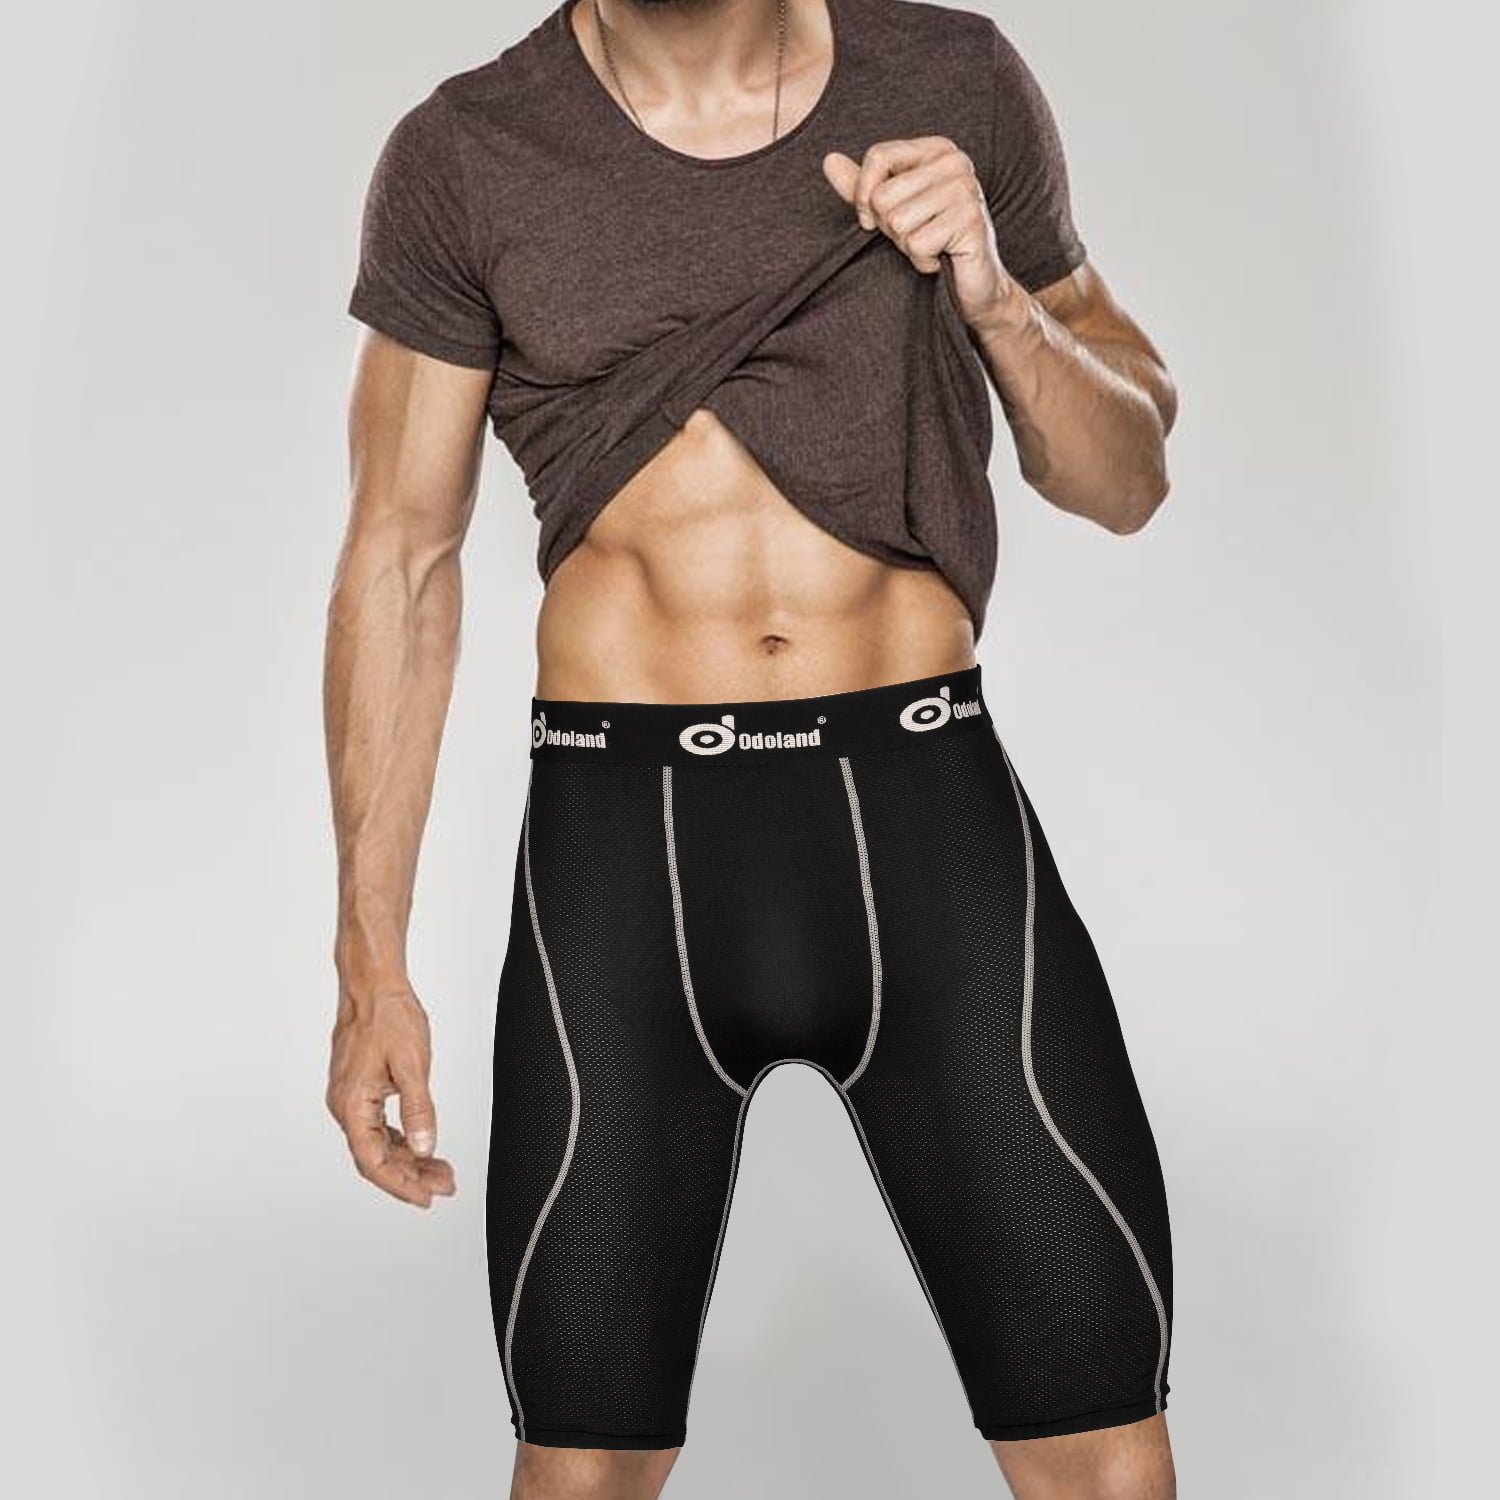 Men Compression Shorts Athletic Tight Underwear Pants Legging Sport Gym Training 